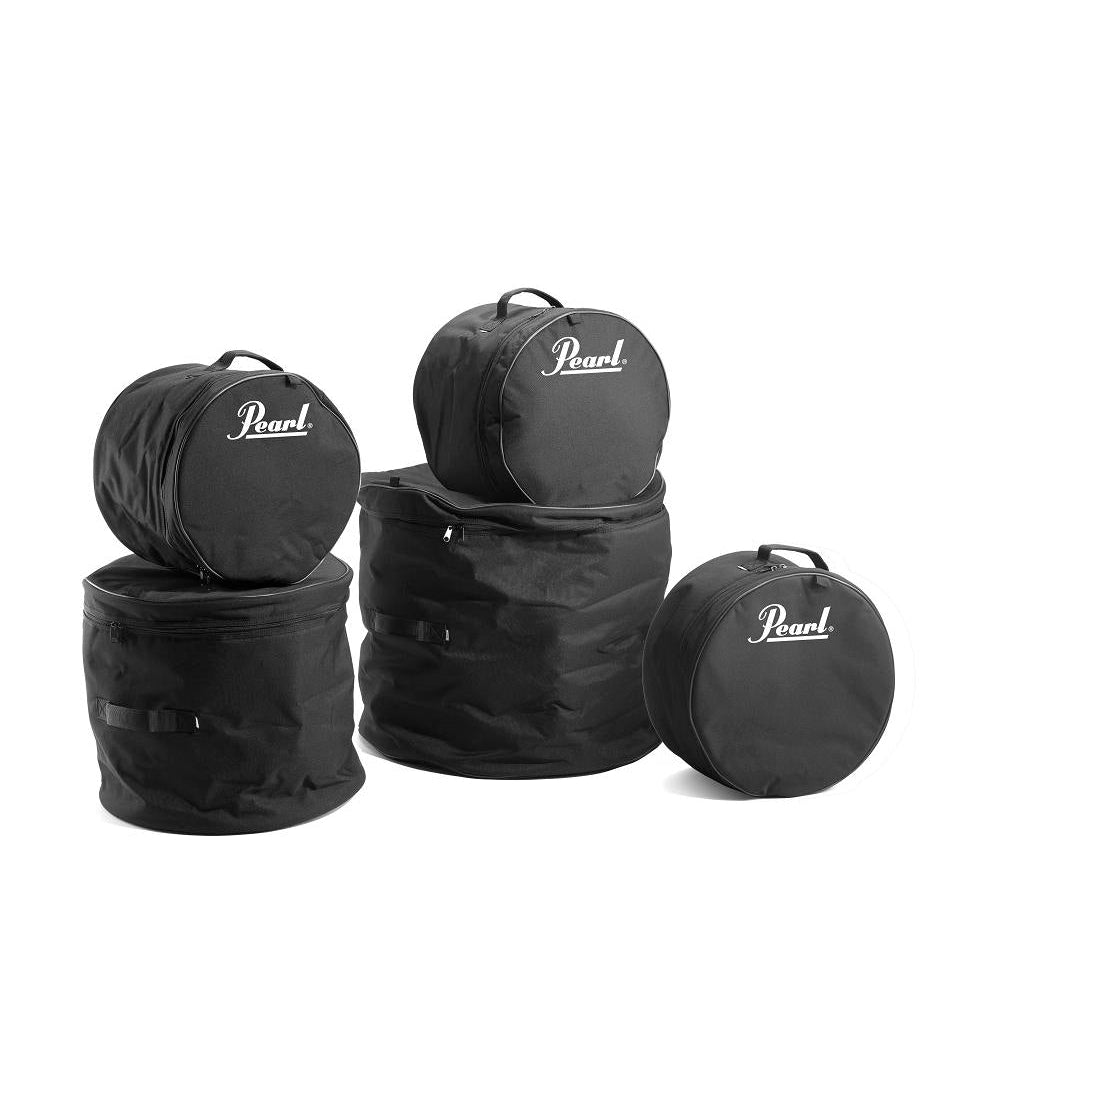 Pearl DBS02N 20” Fusion Bag Set